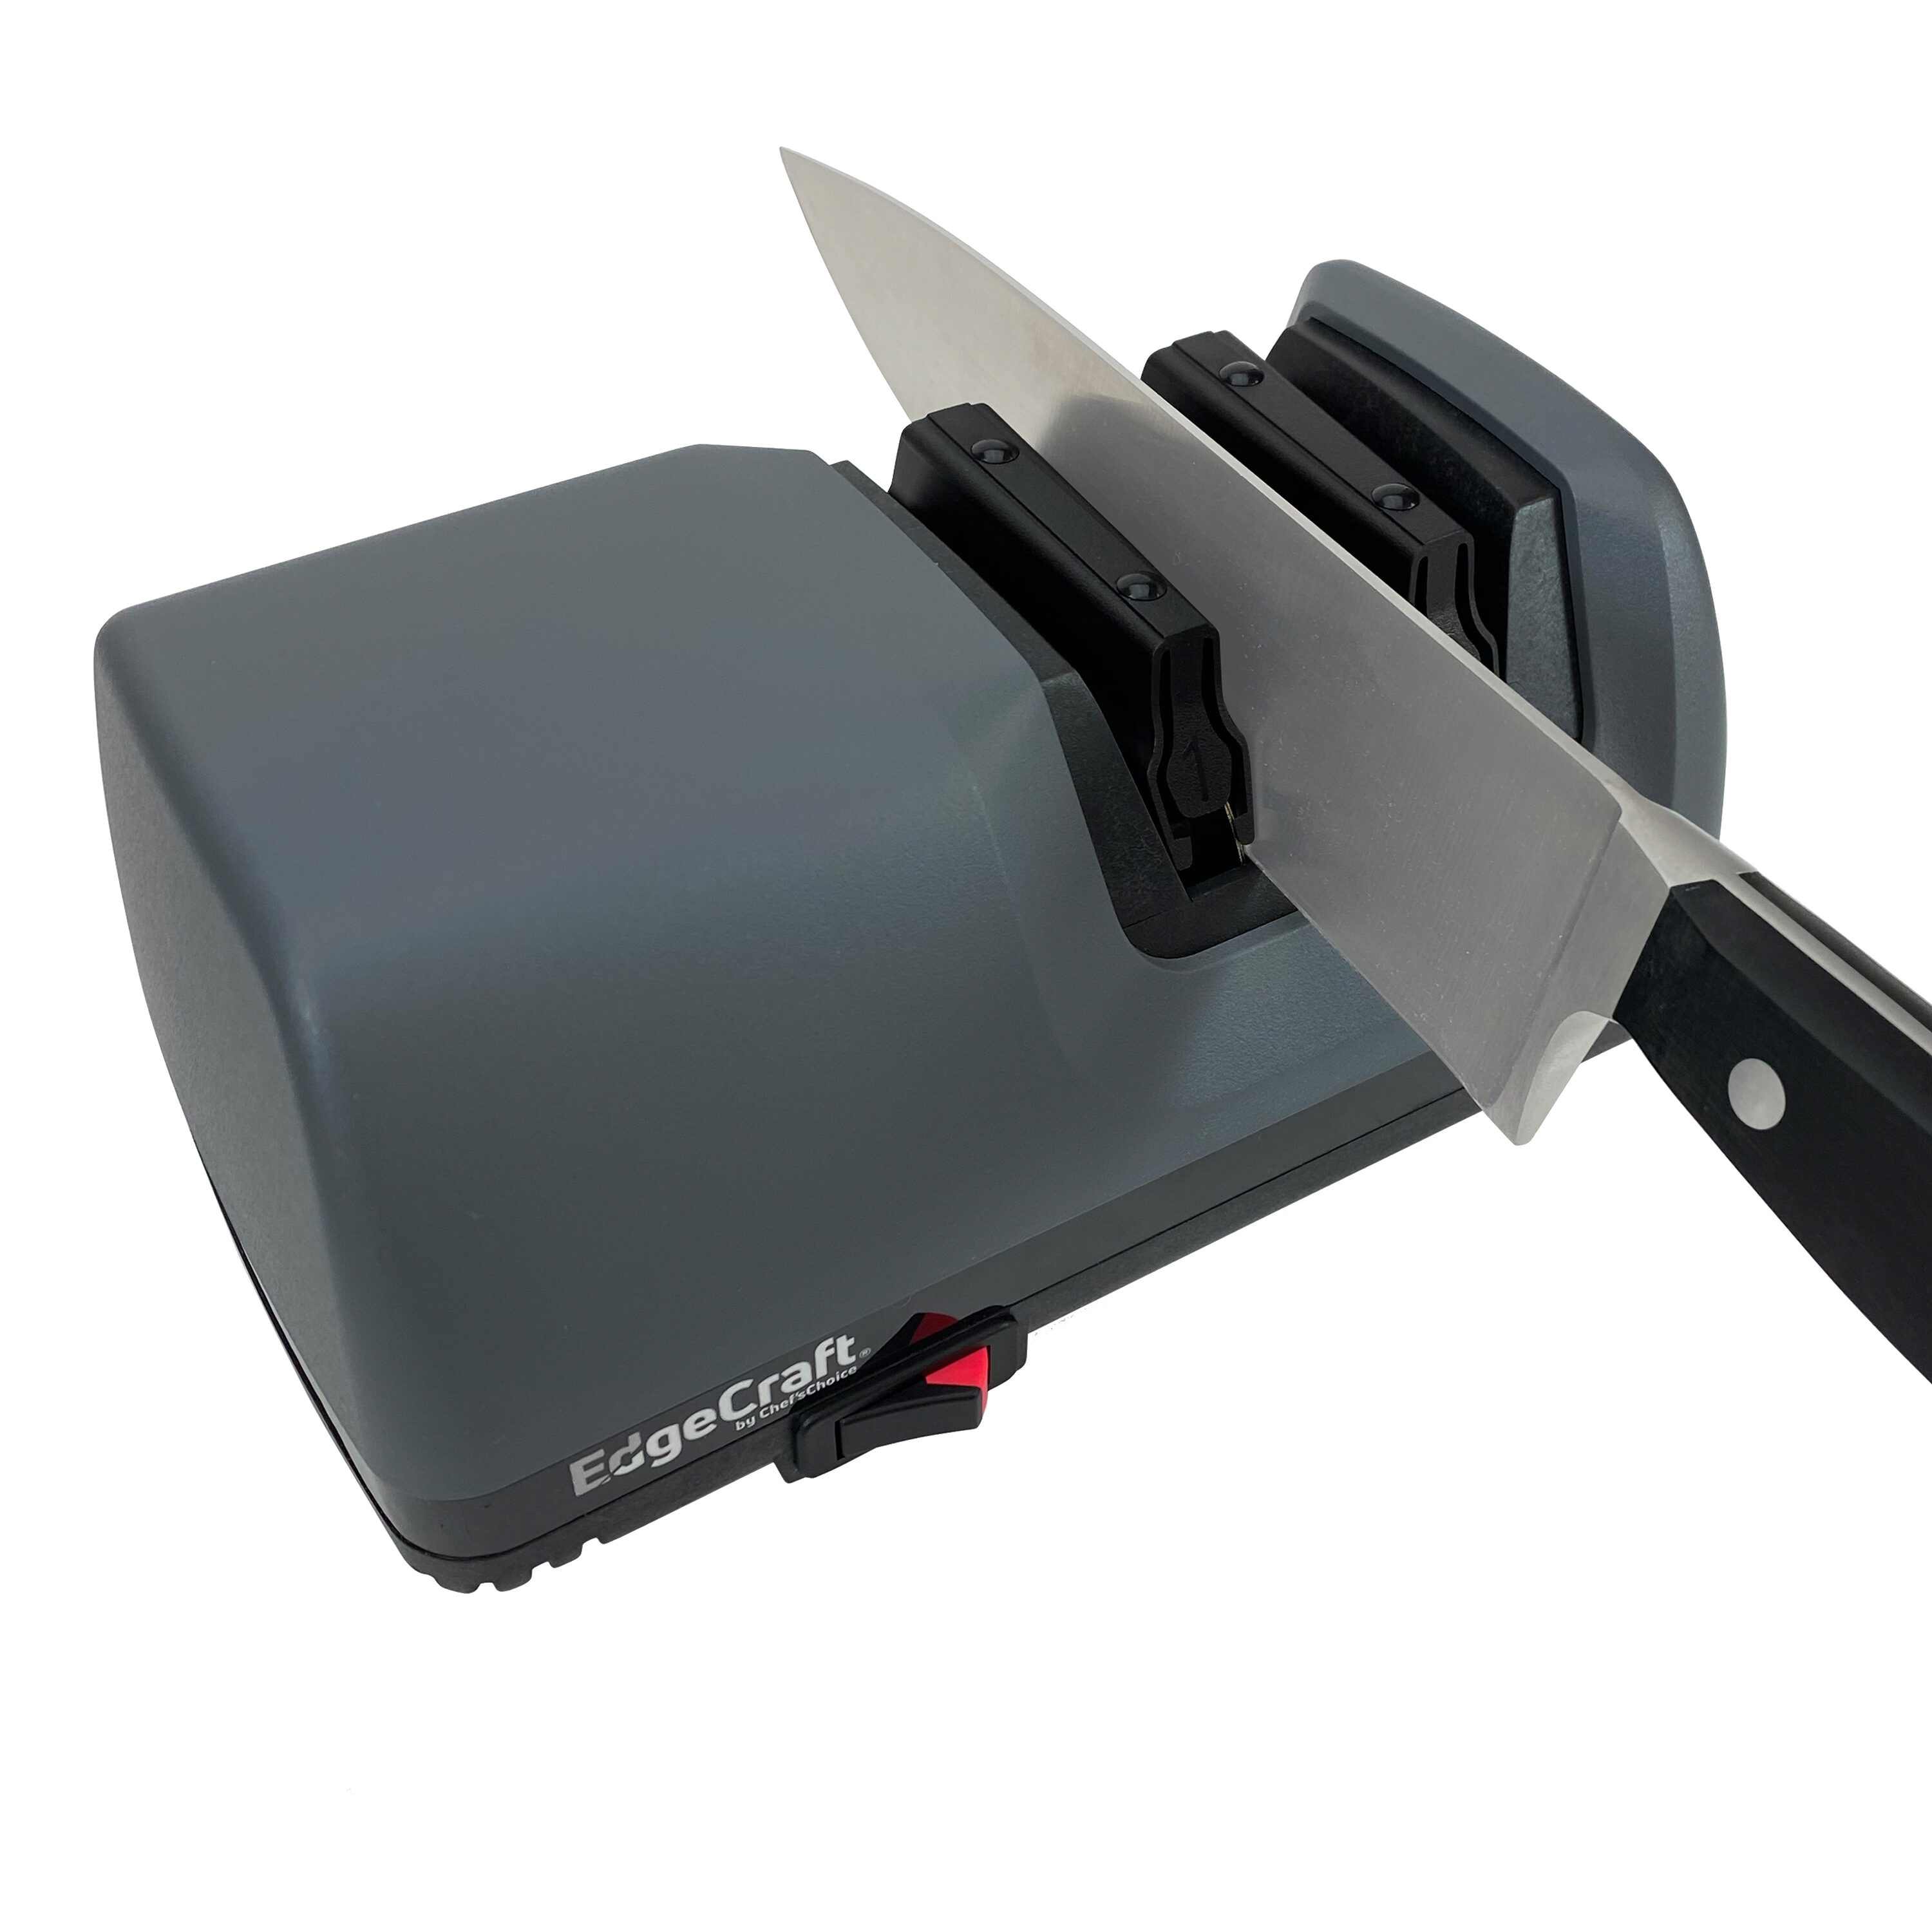 1-Pack* Chef's Choice Manual Knife Sharpener Dizor Engineered